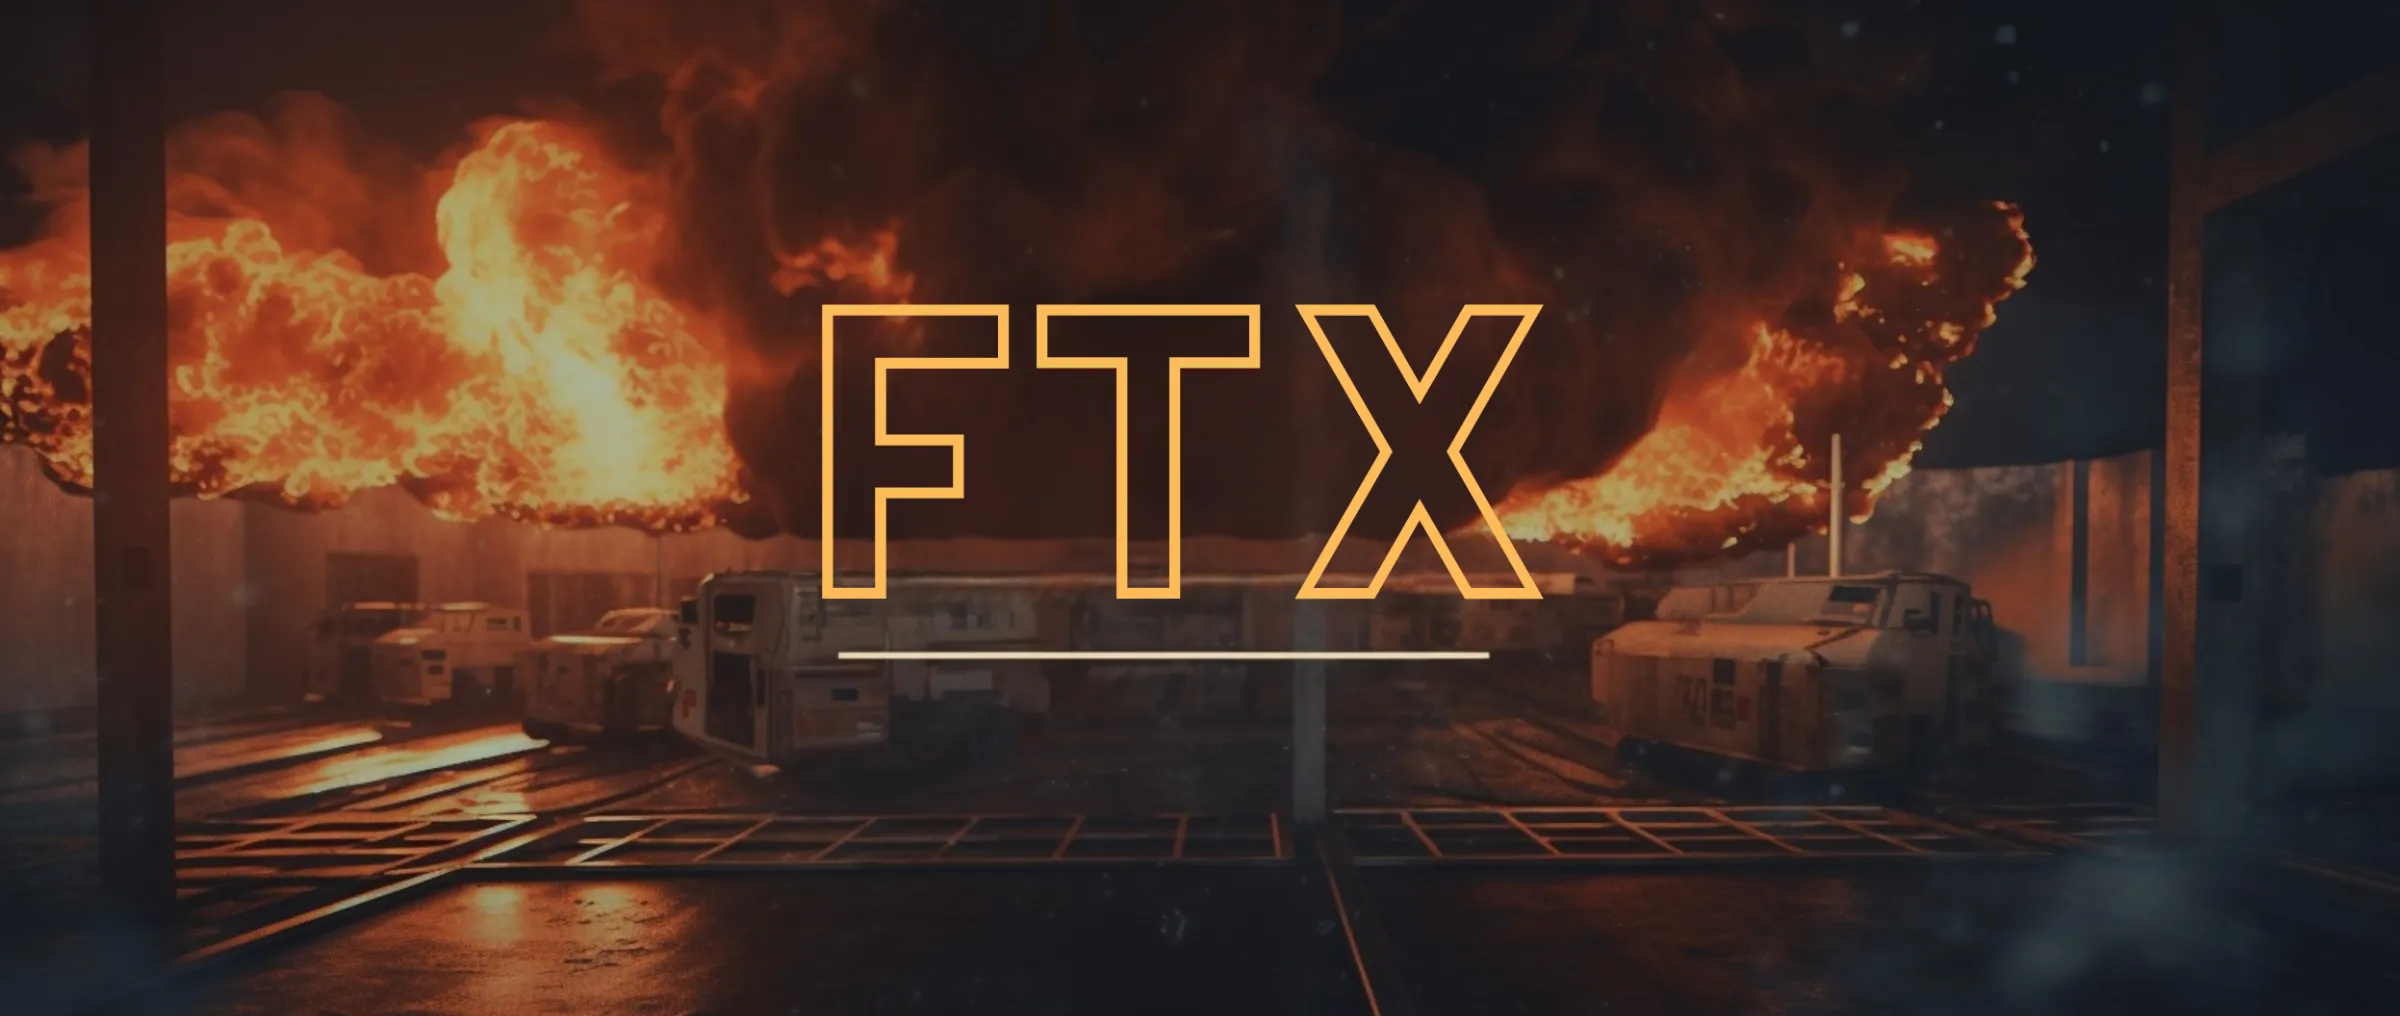 FTX потребовала у обанкротившейся Genesis возврата $4 млрд